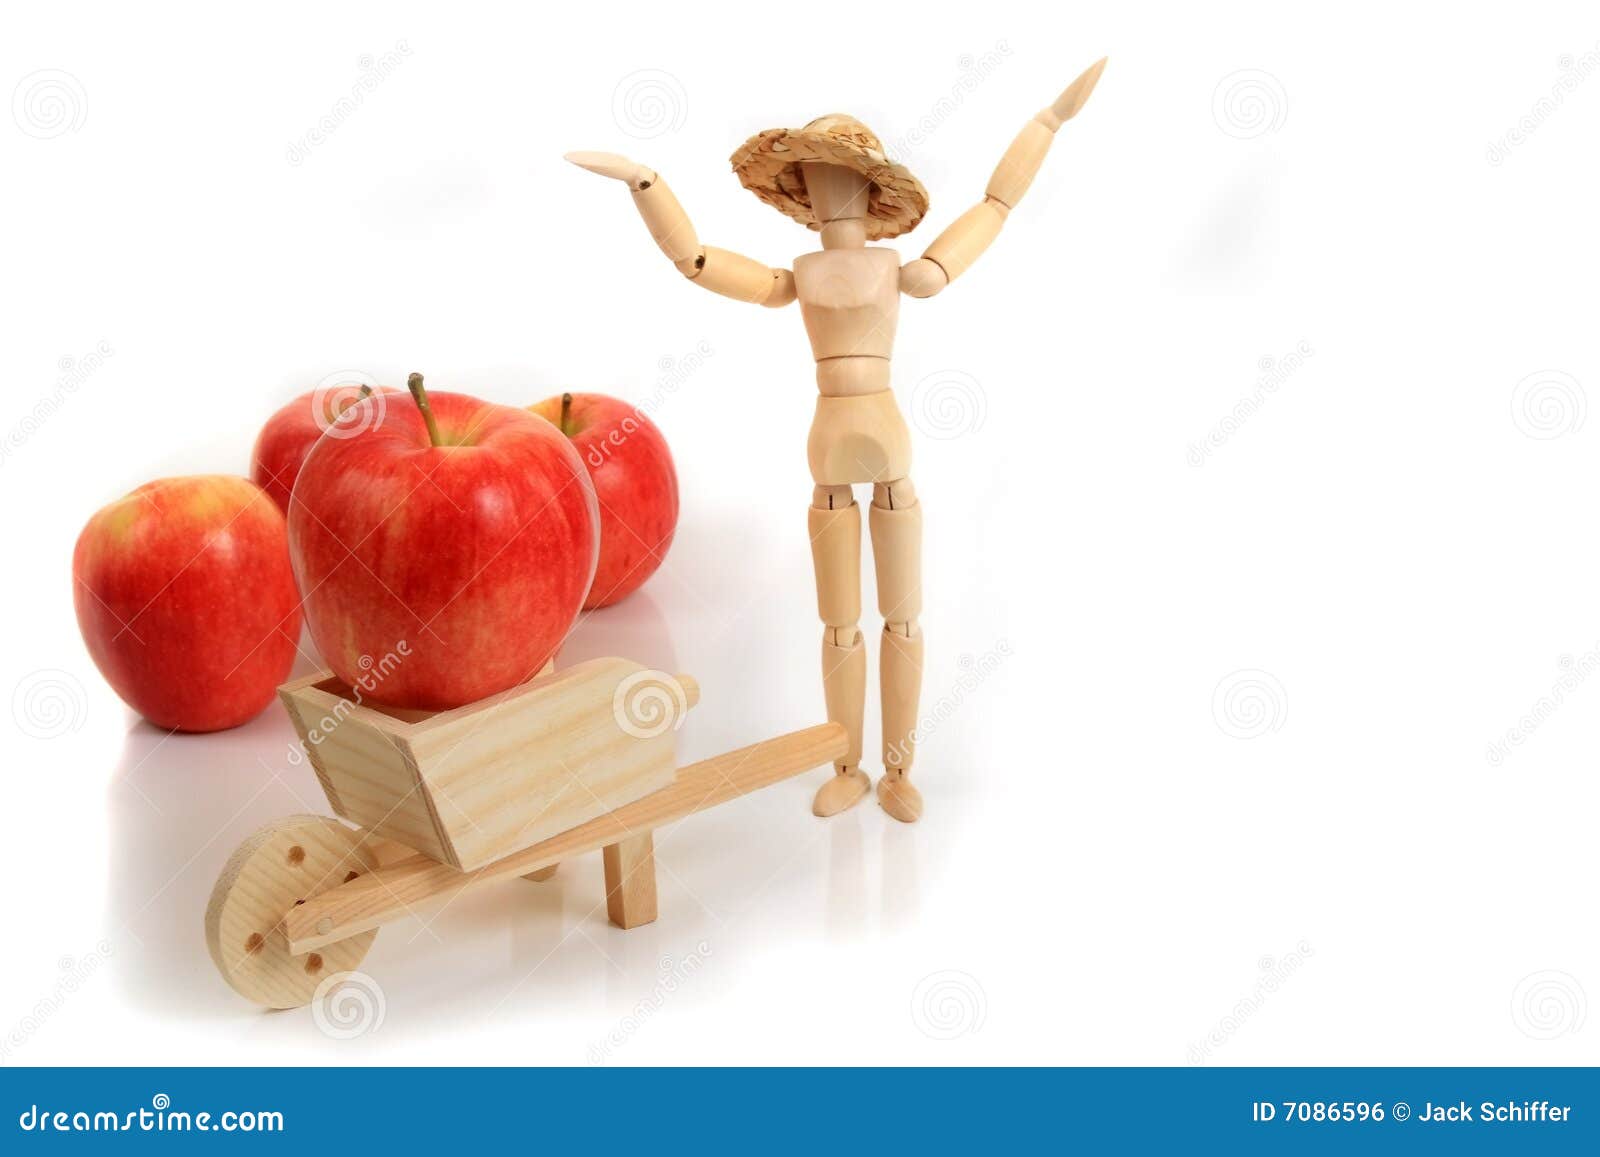 apple grower